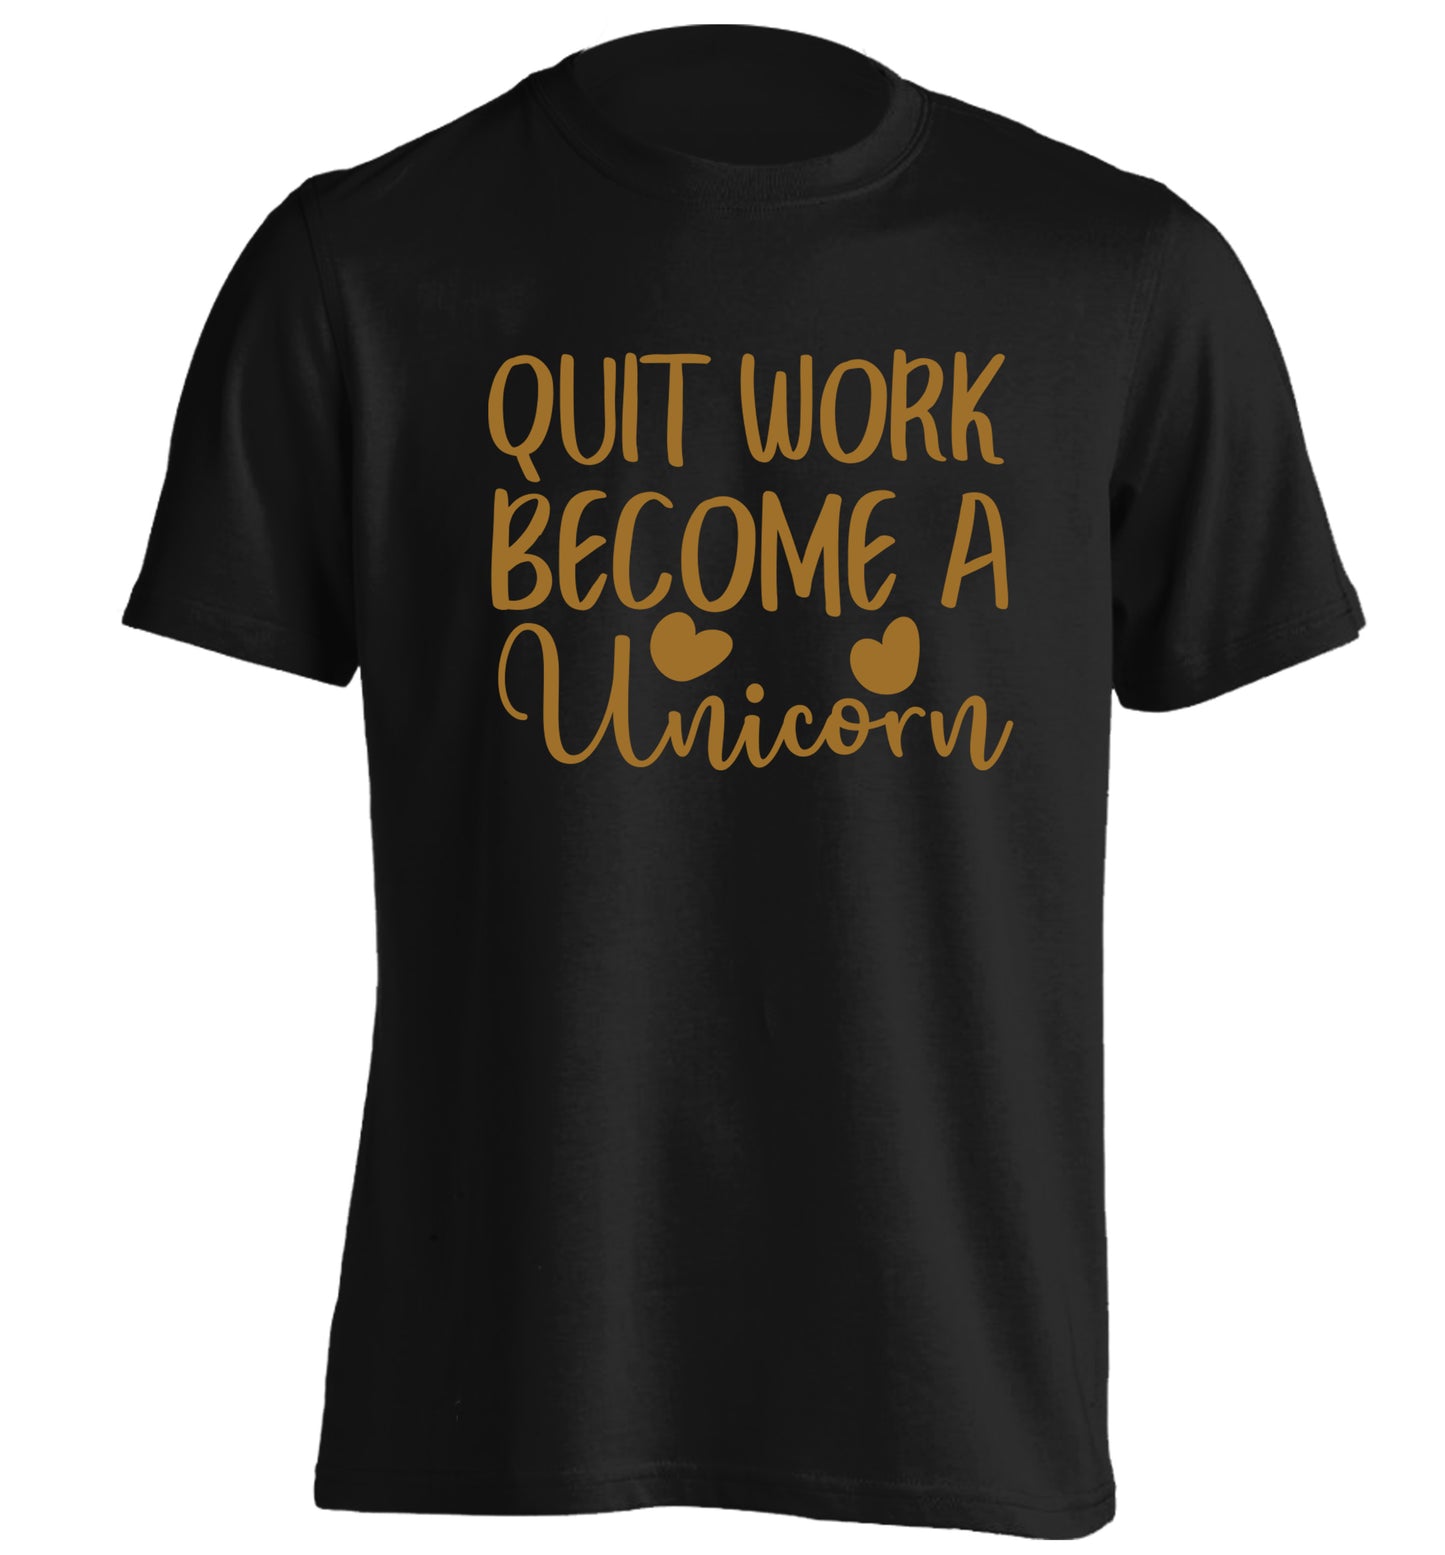 Quit work become a unicorn adults unisex black Tshirt 2XL